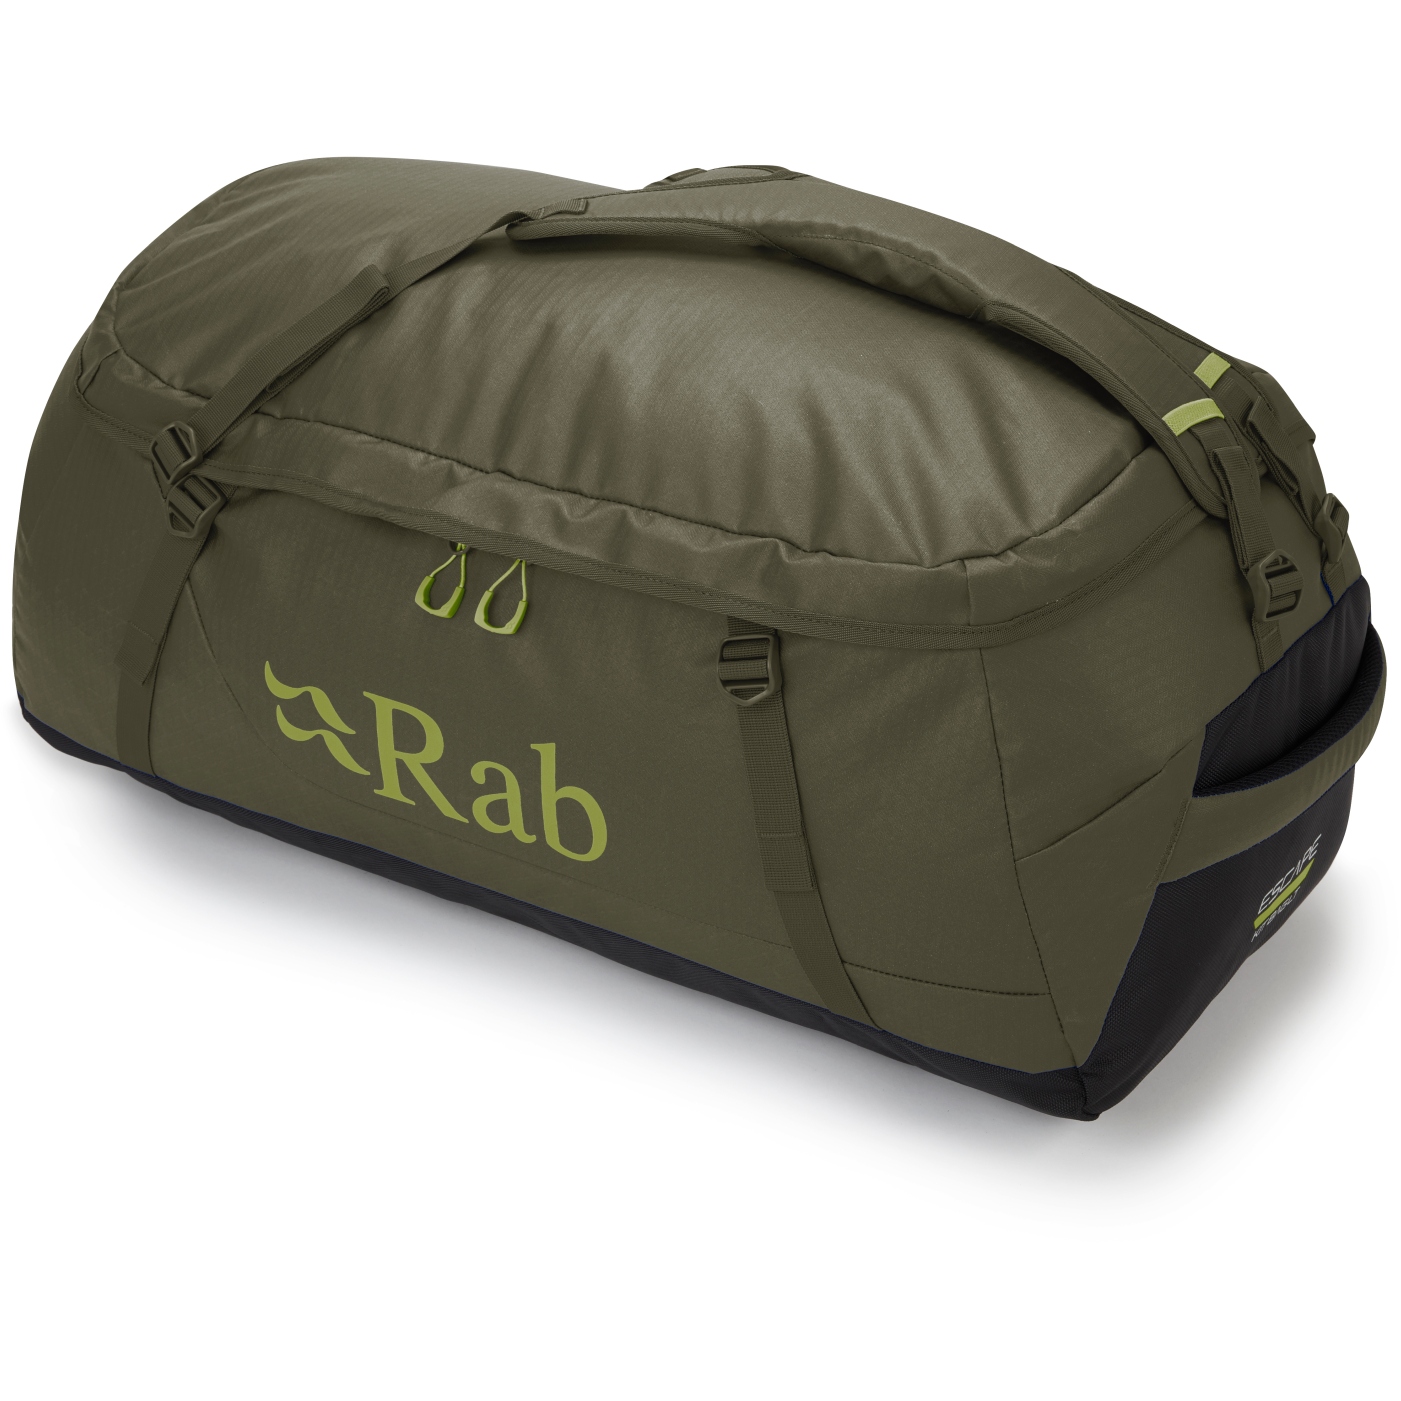 Picture of Rab Escape Kit Bag LT 70L Duffle Bag - army